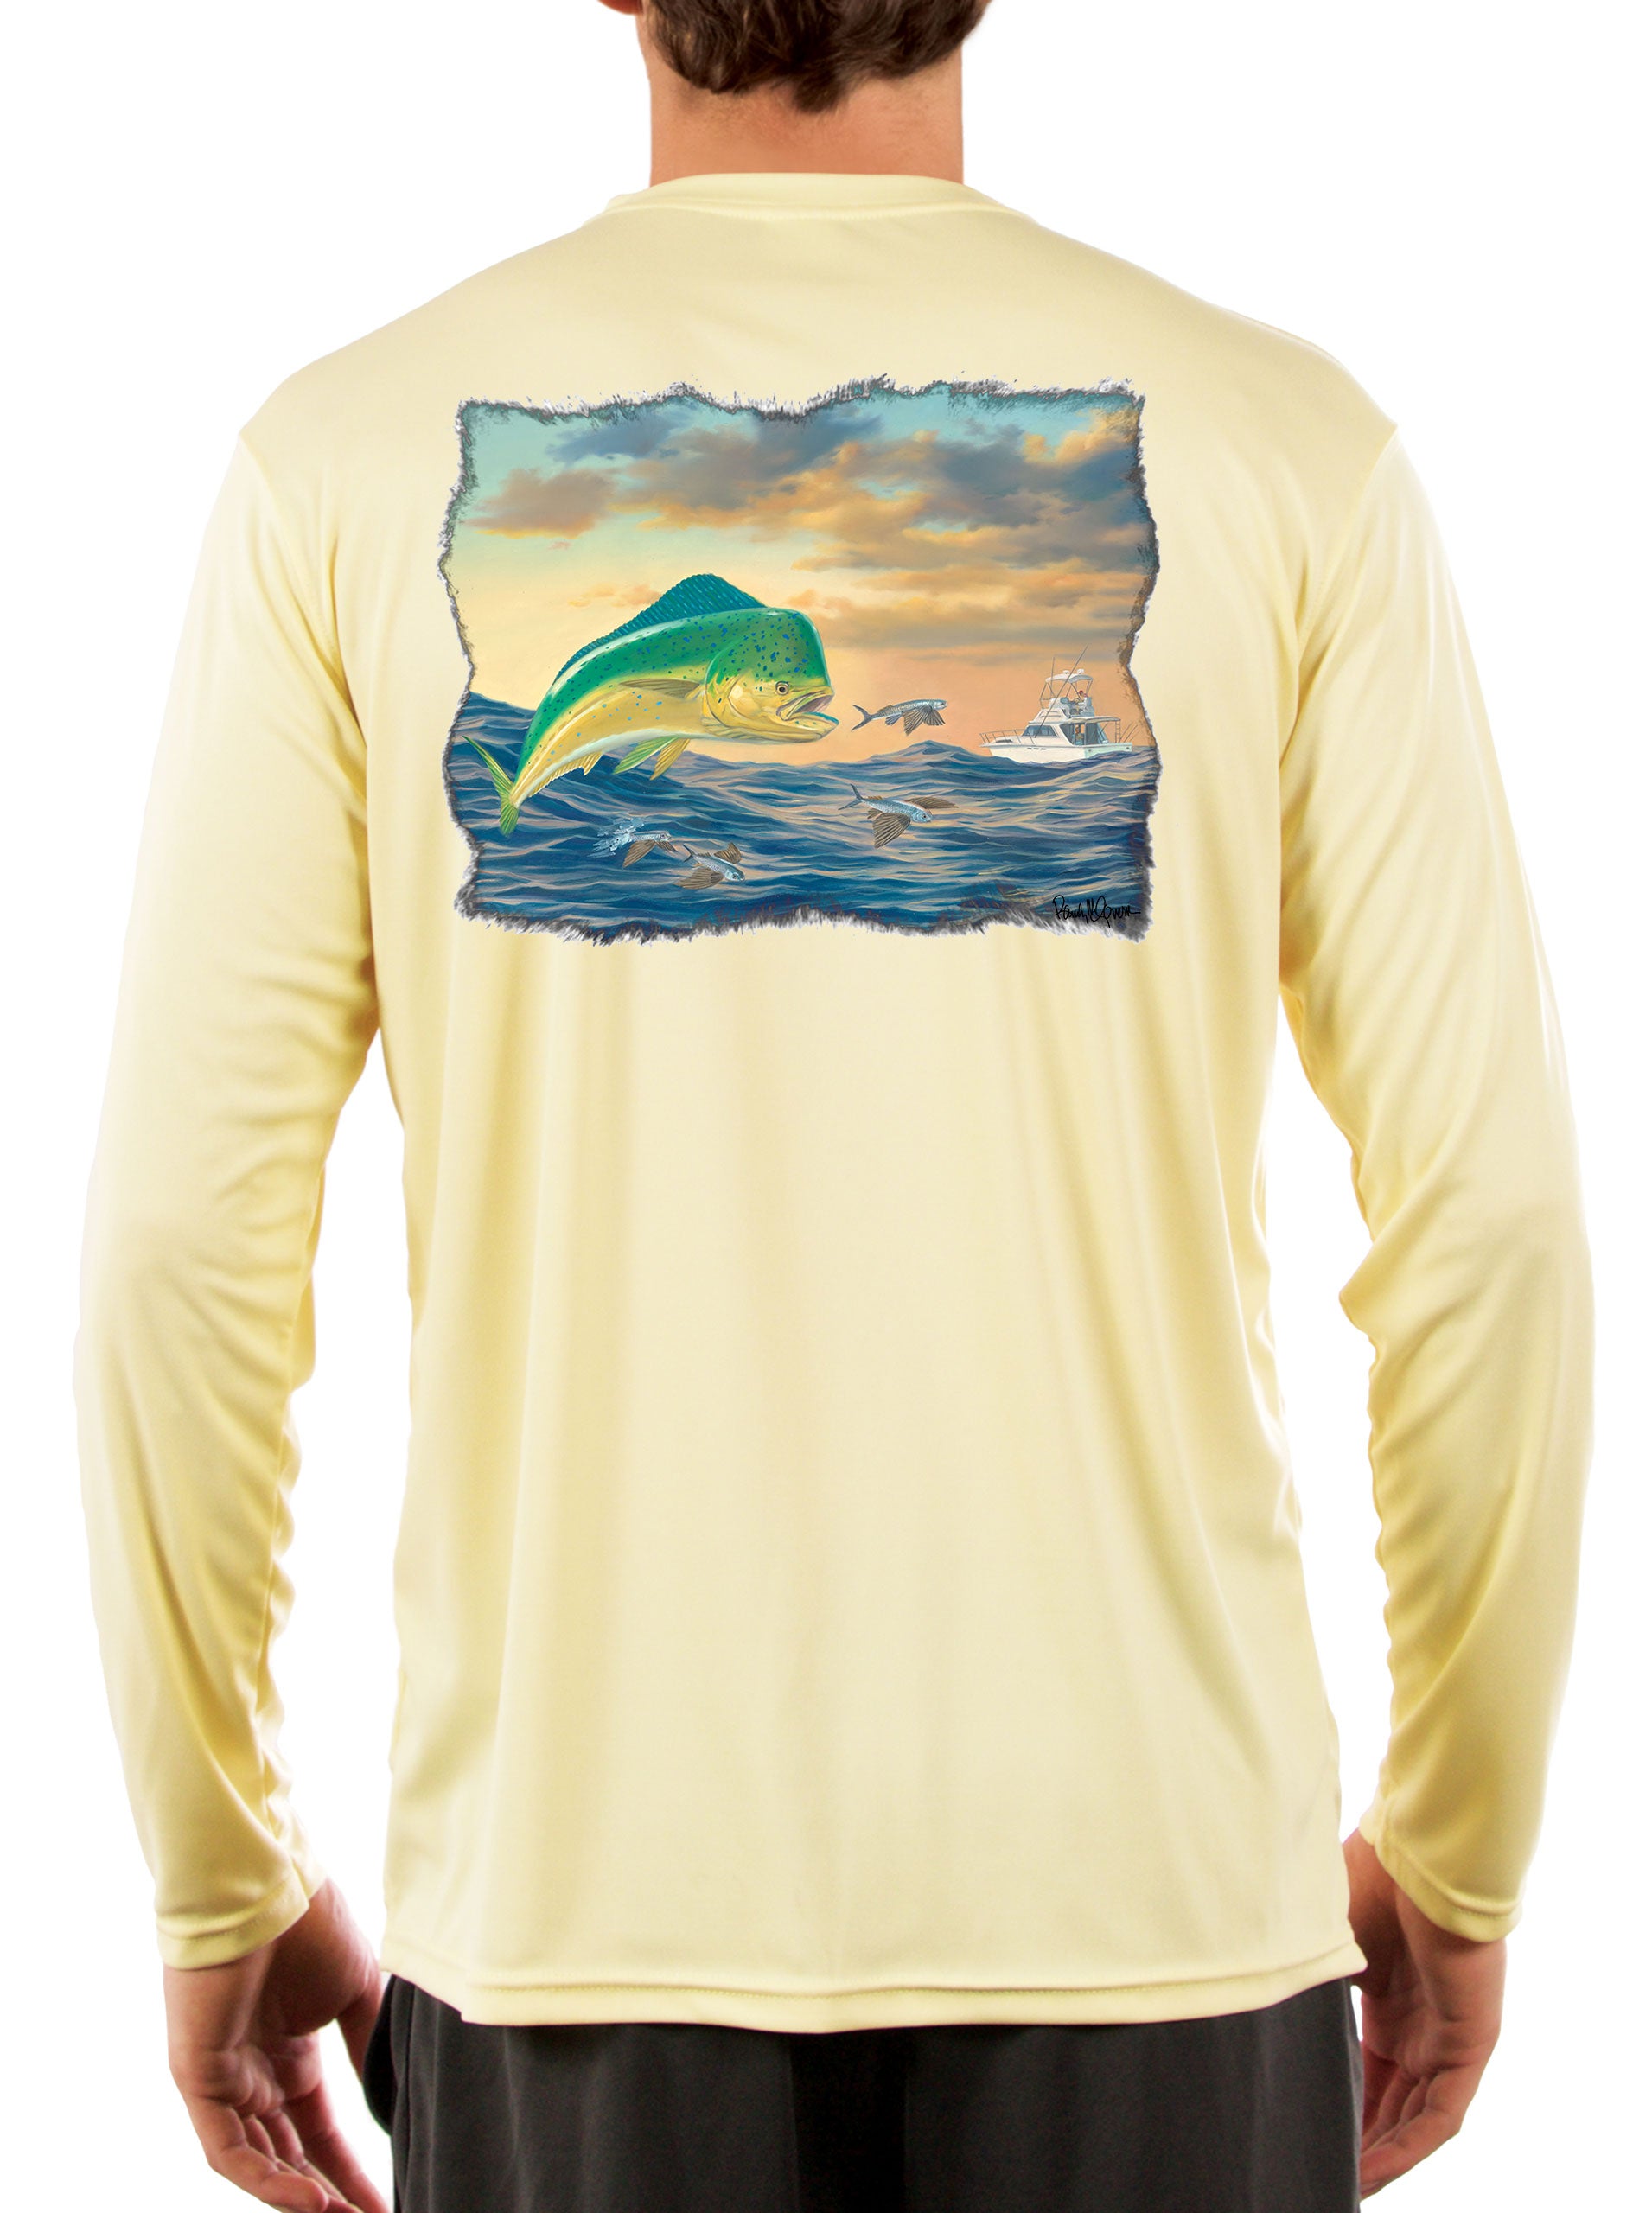 Mahi-Mahi with Flying Fish Fishing Shirts For Men featuring Dorado /  Dolphinfish art by Randy McGovern